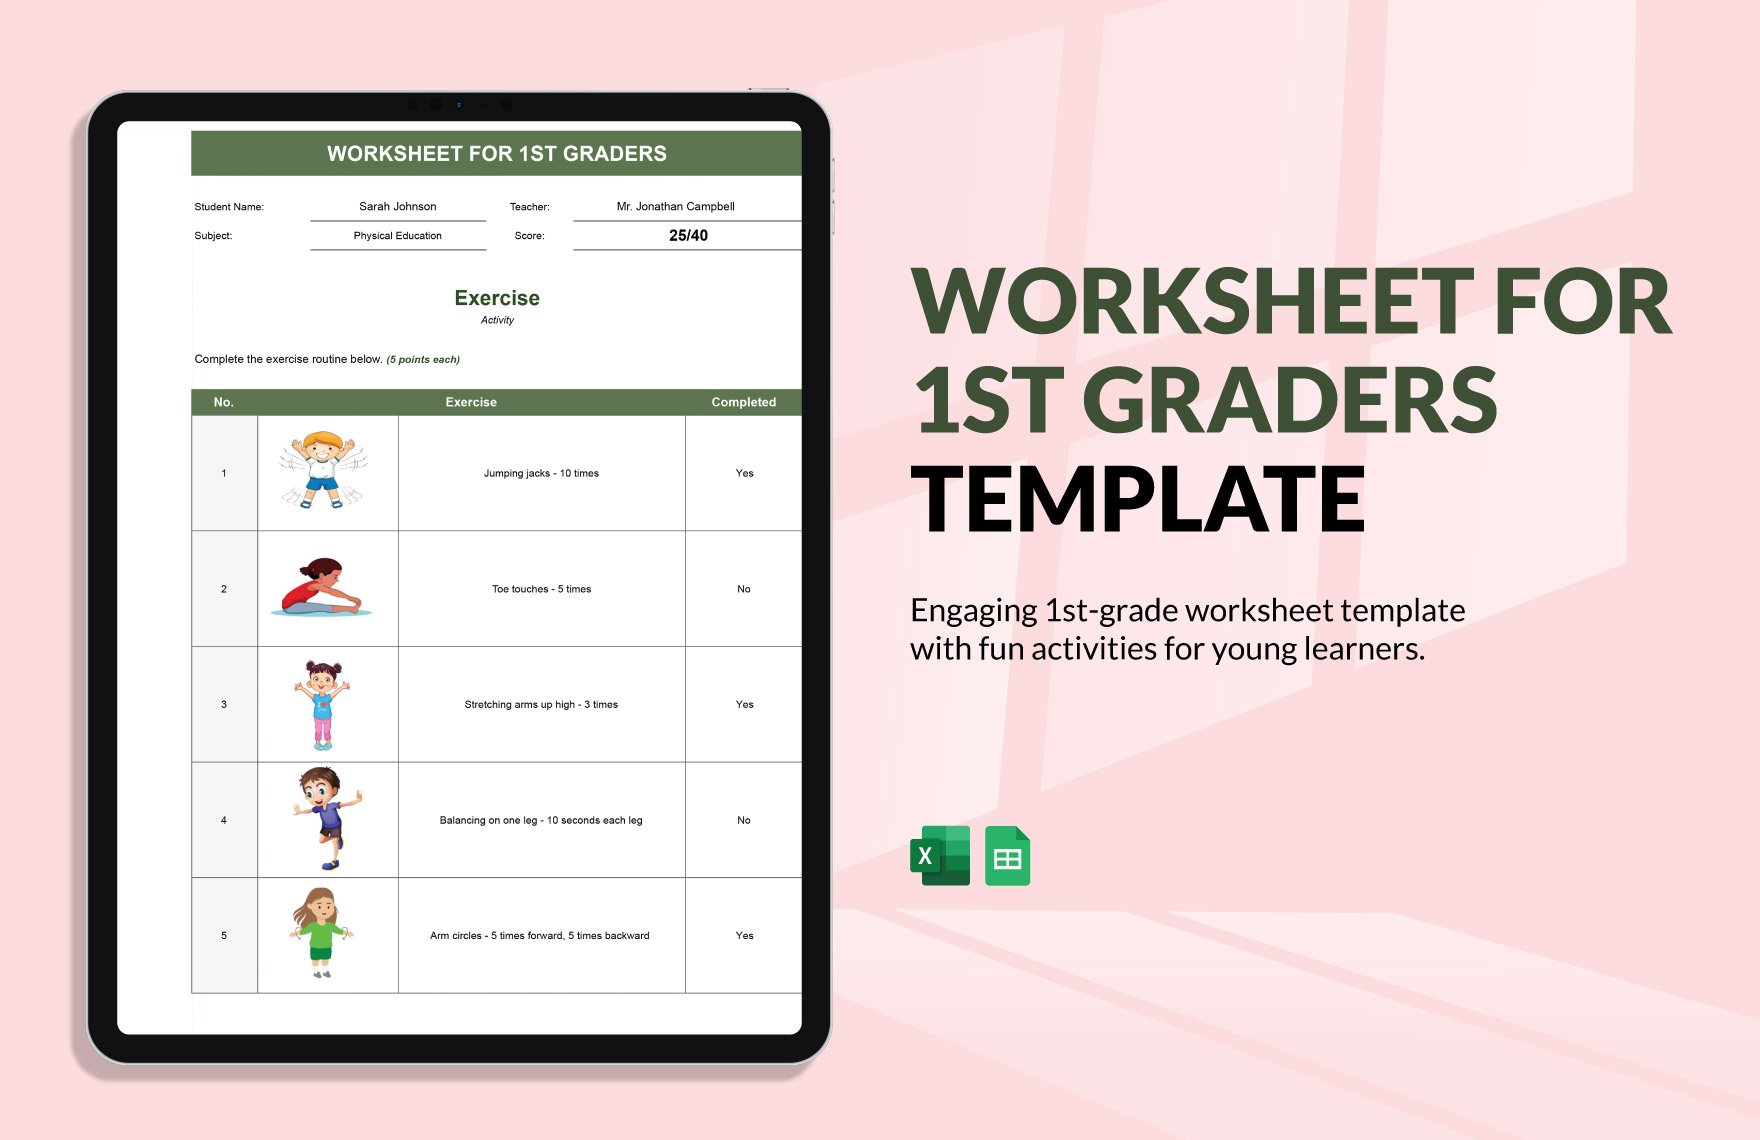 Worksheet For 1st Graders Template in Excel, Google Sheets